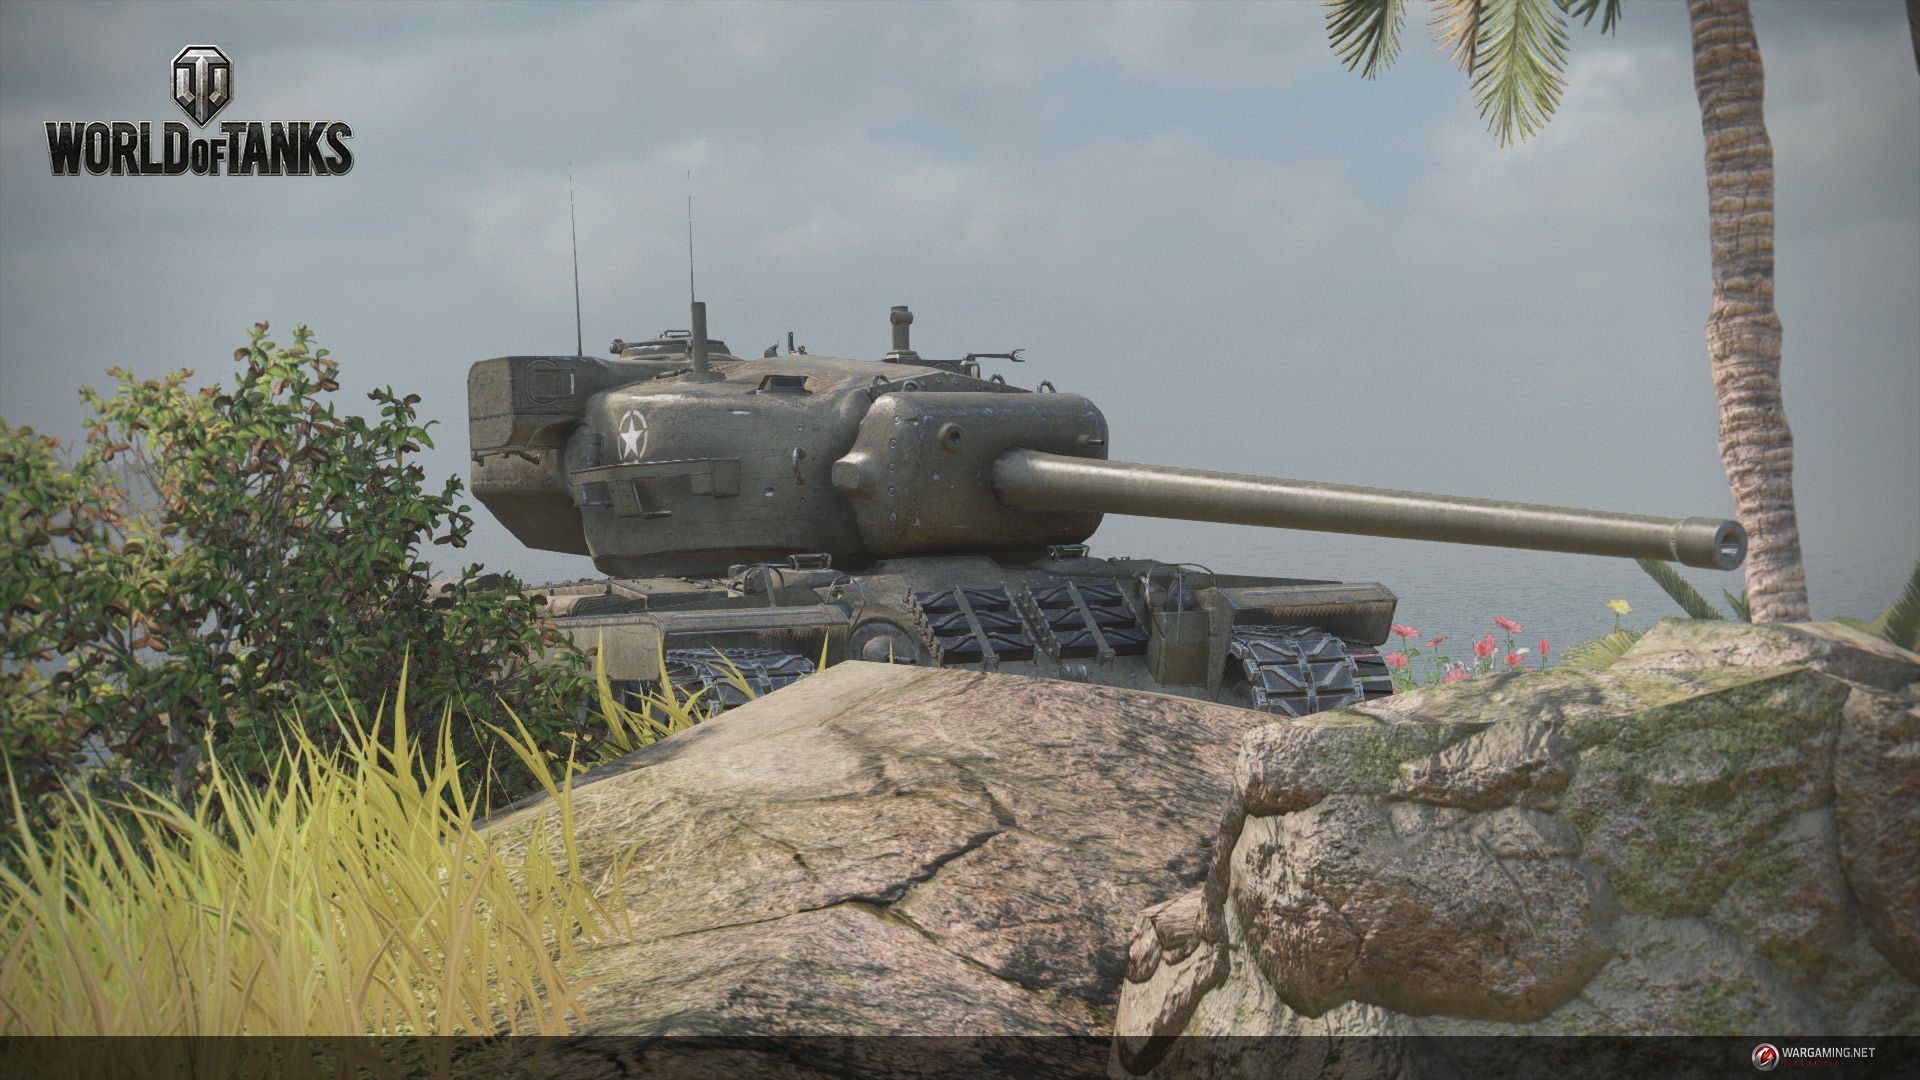 World of Tanks (2015) promotional art